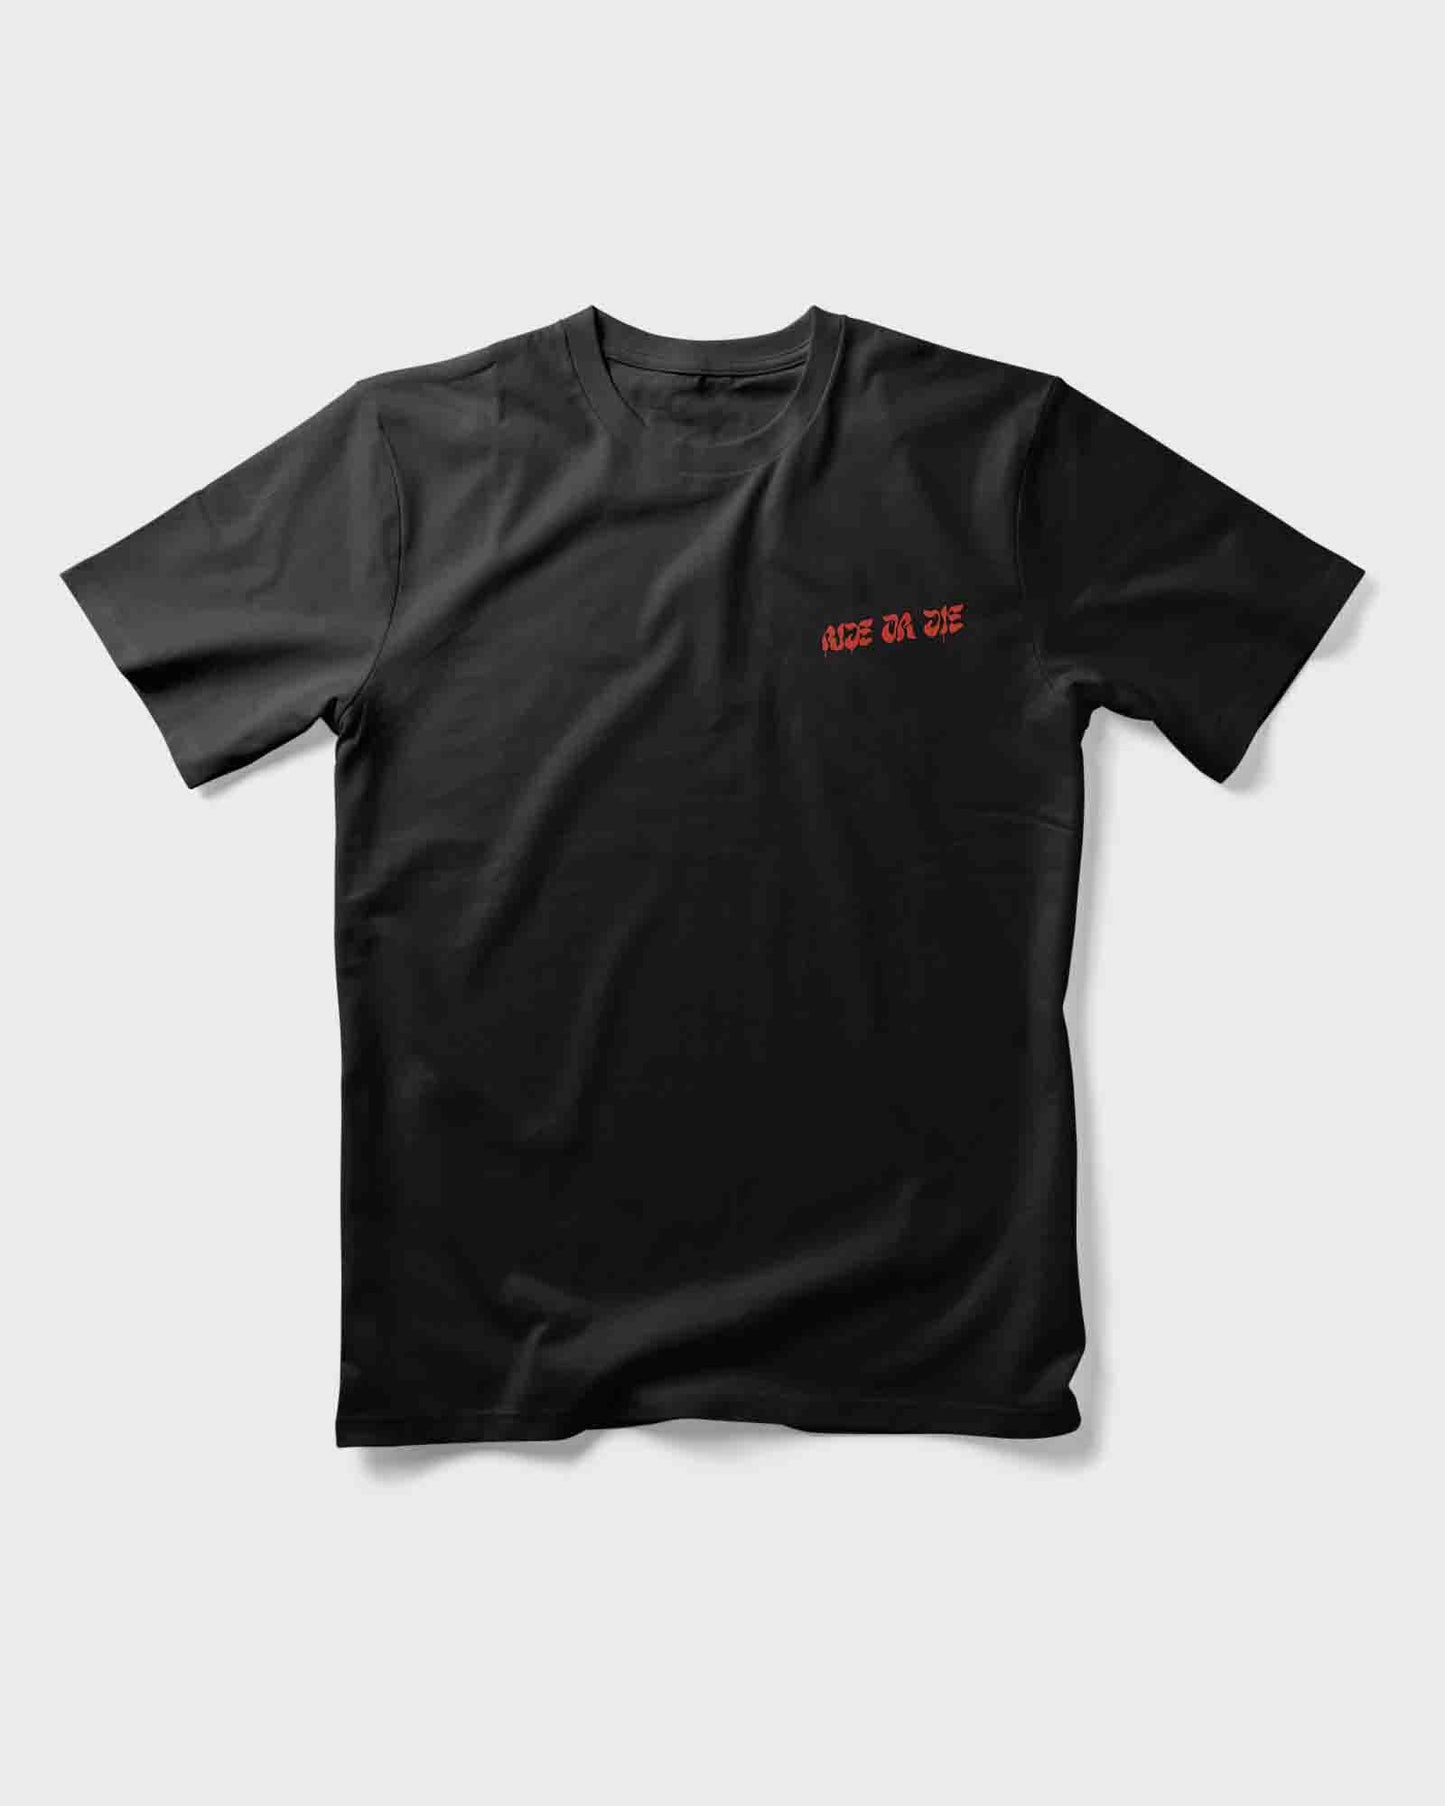 RIDE OR DIE T-Shirt Unisex Black Front & Backprint